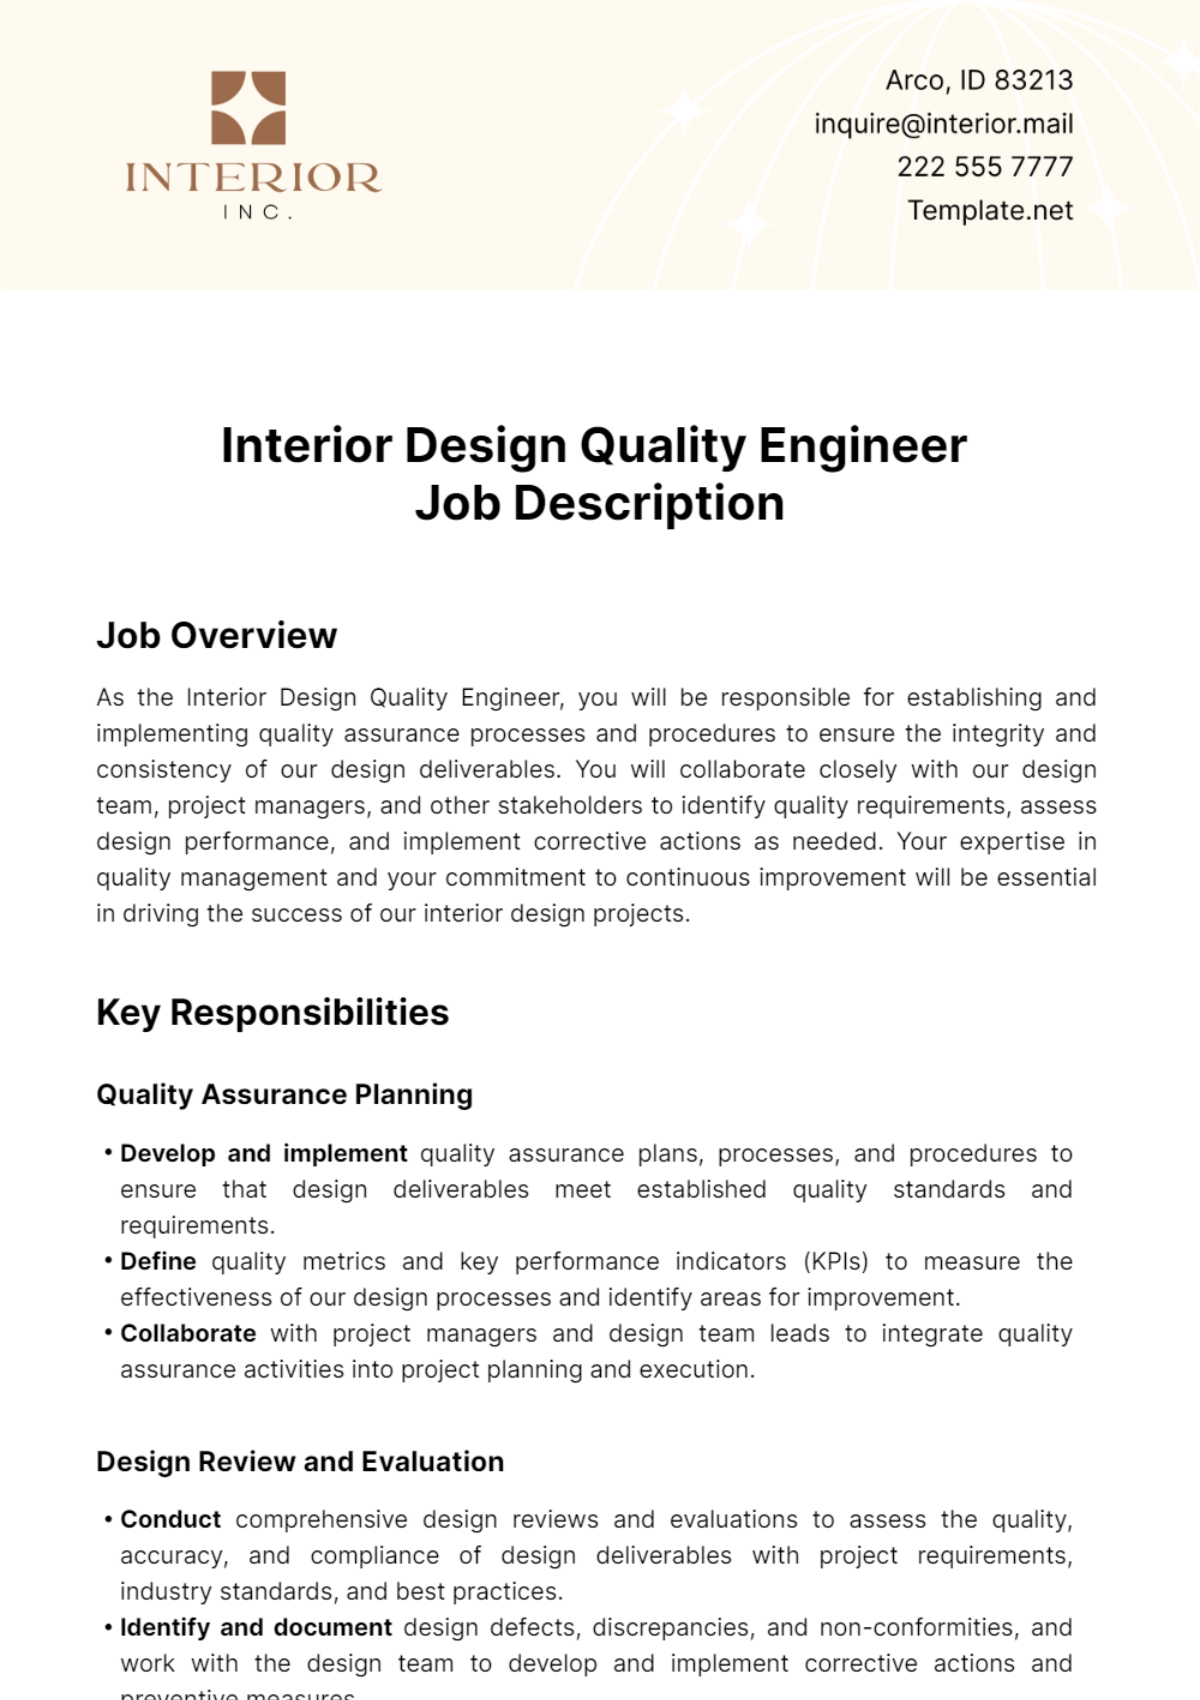 Interior Design Quality Engineer Job Description Template